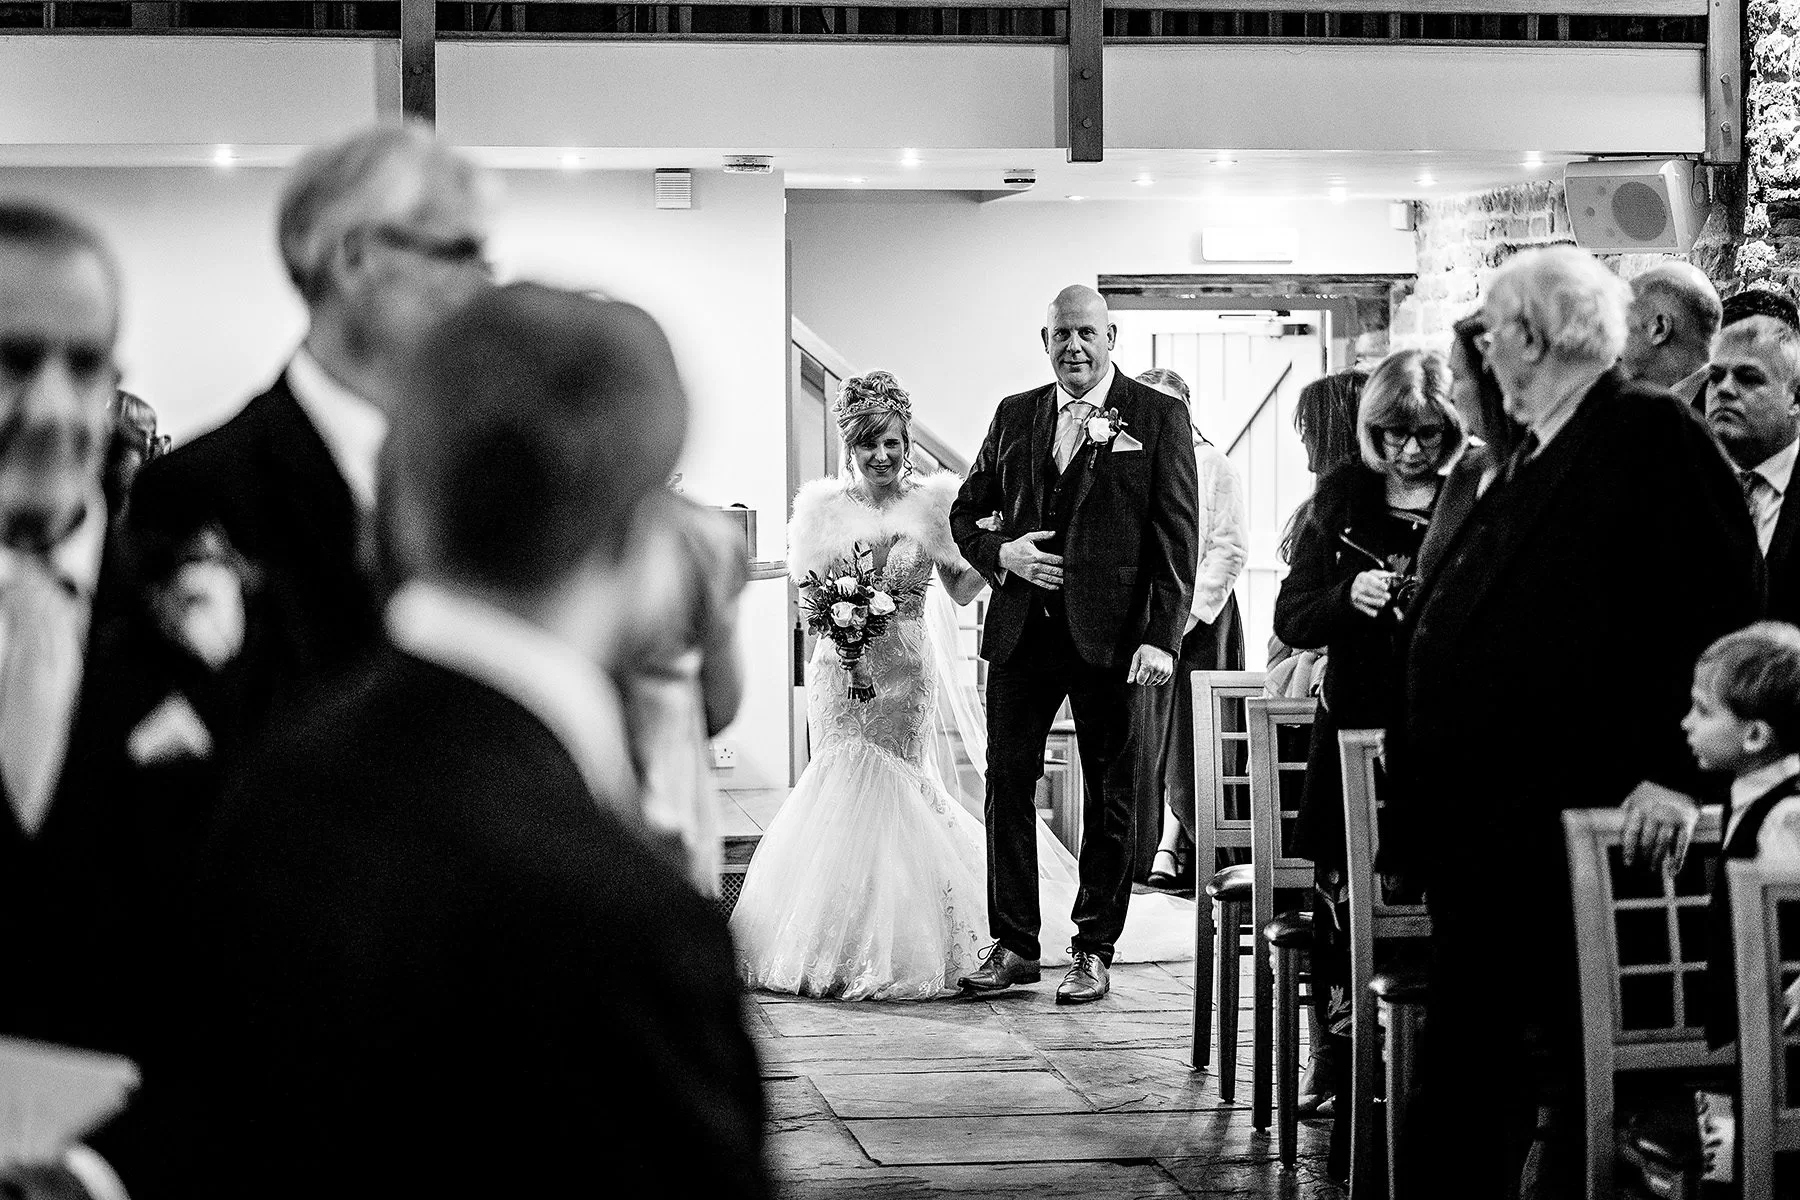 The bride enters the wedding barn